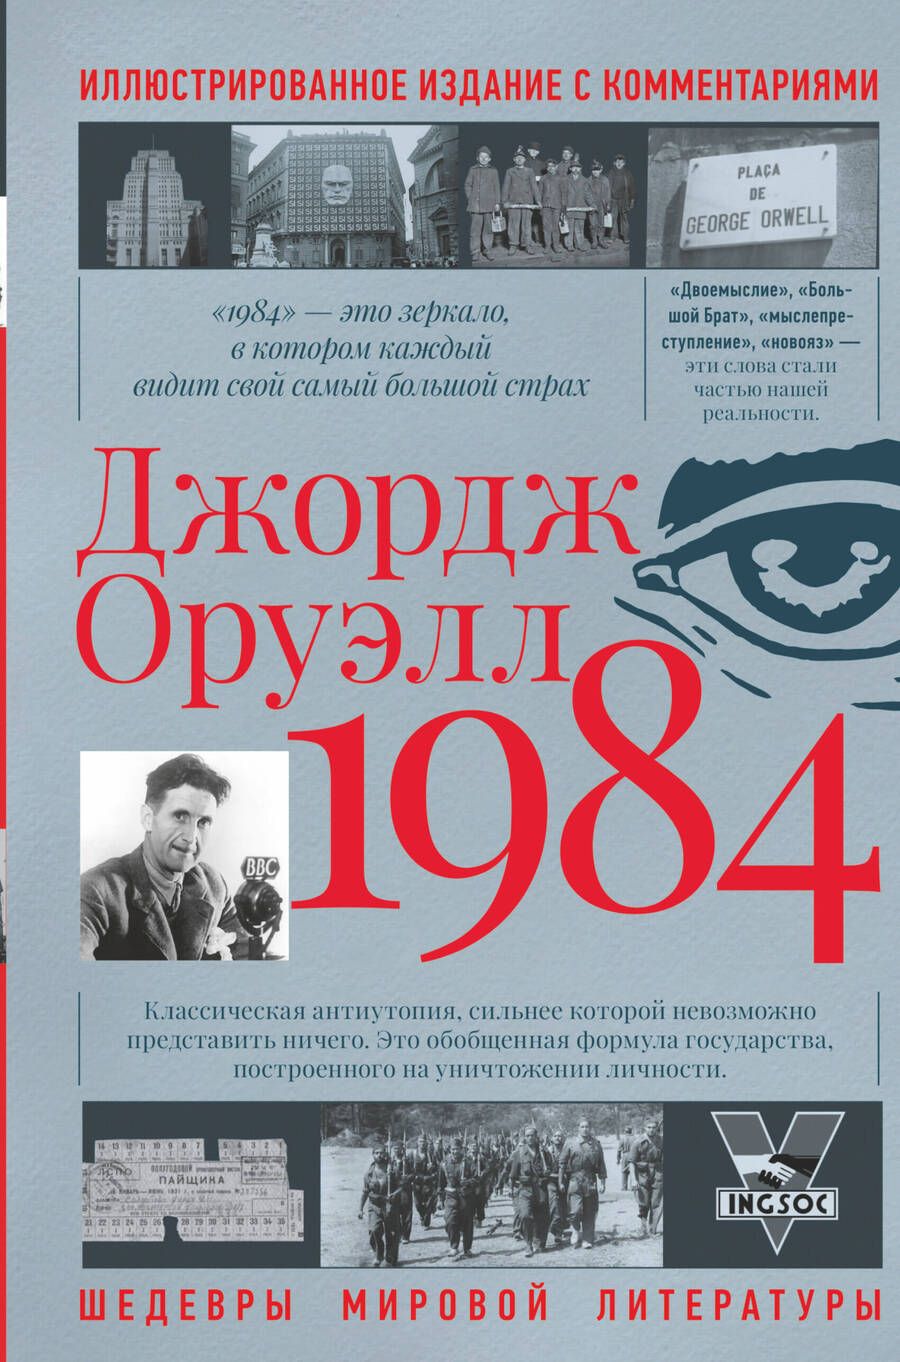 Обложка книги "Оруэлл: 1984"